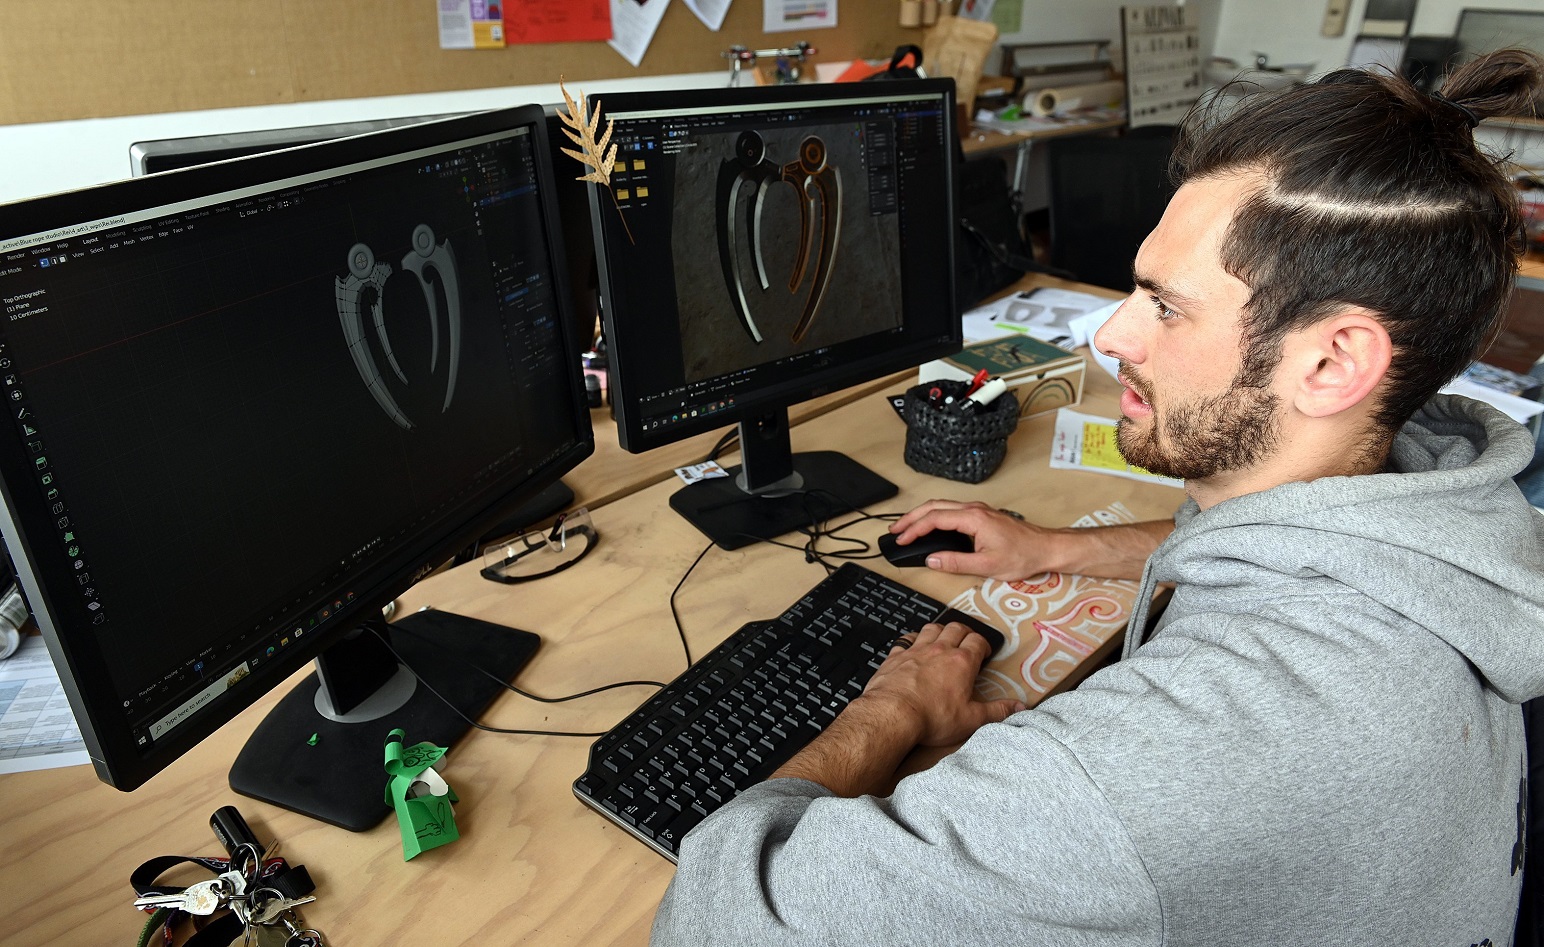 Otago Polytechnic product design student Zac Mātariki uses the computer software Blender.